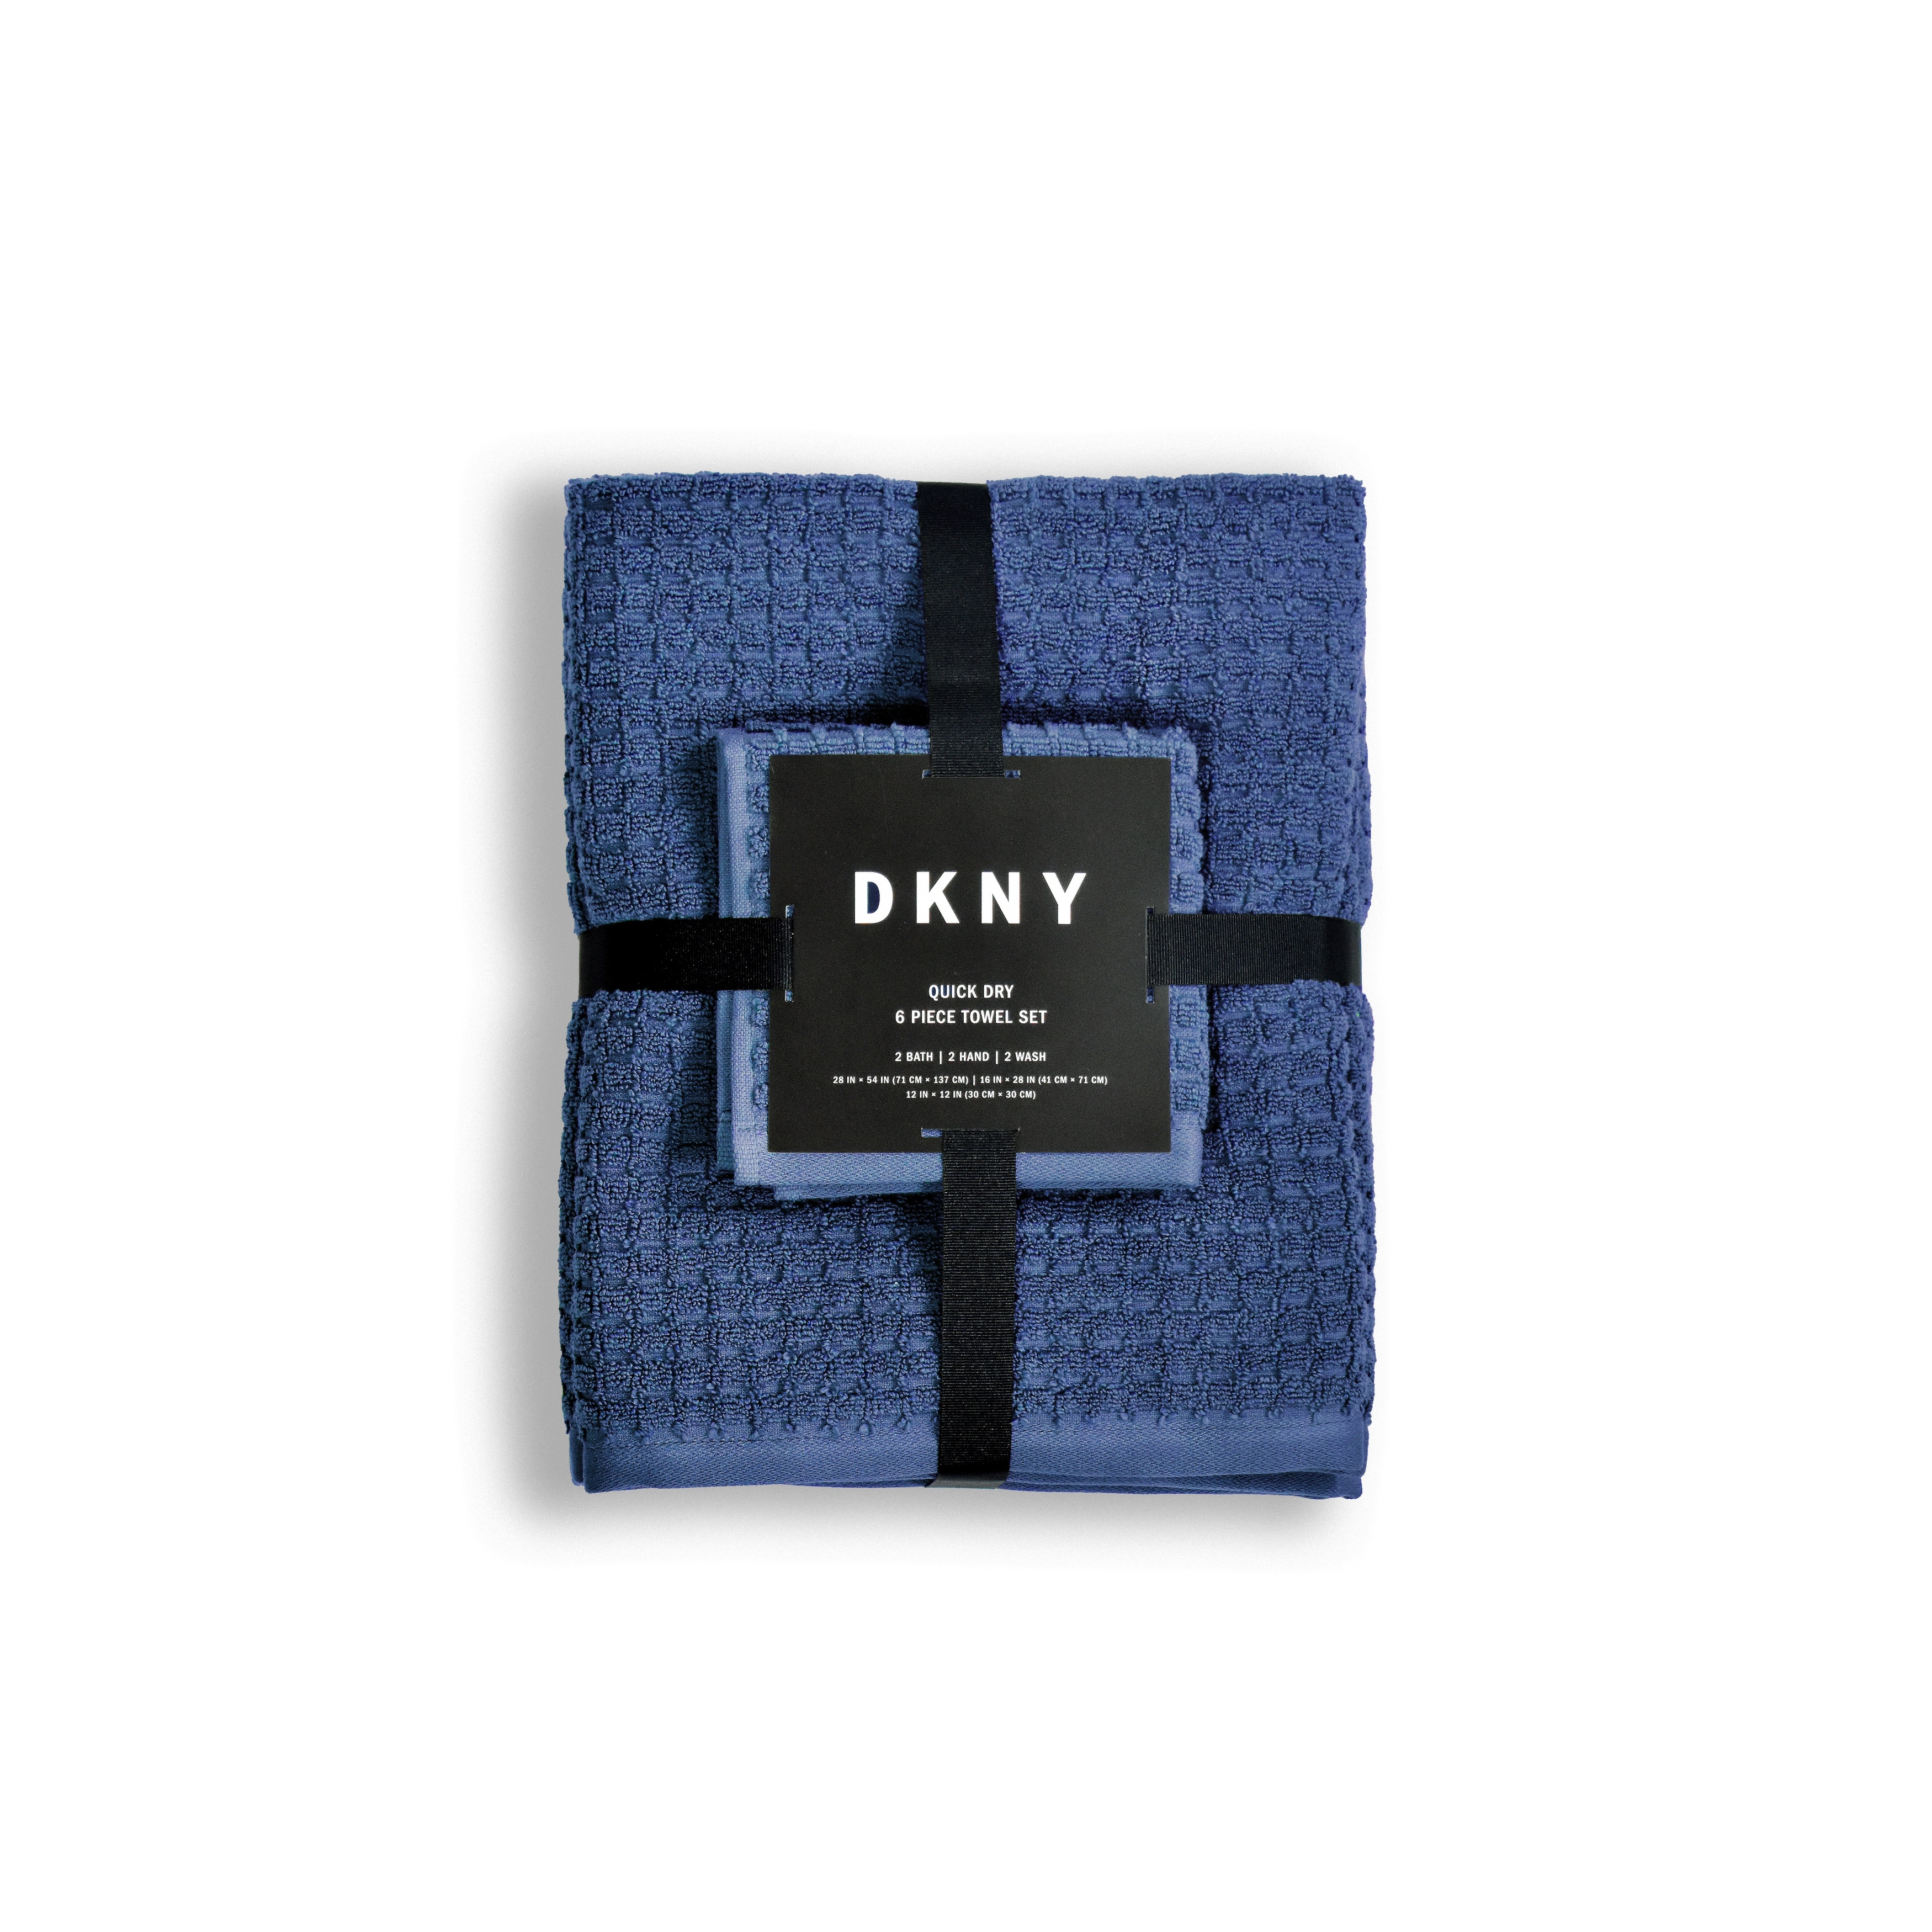 DKNY KITCHEN TOWELS (2) TREES BLACK WHITE 100% COTTON 18 X 28 NWT